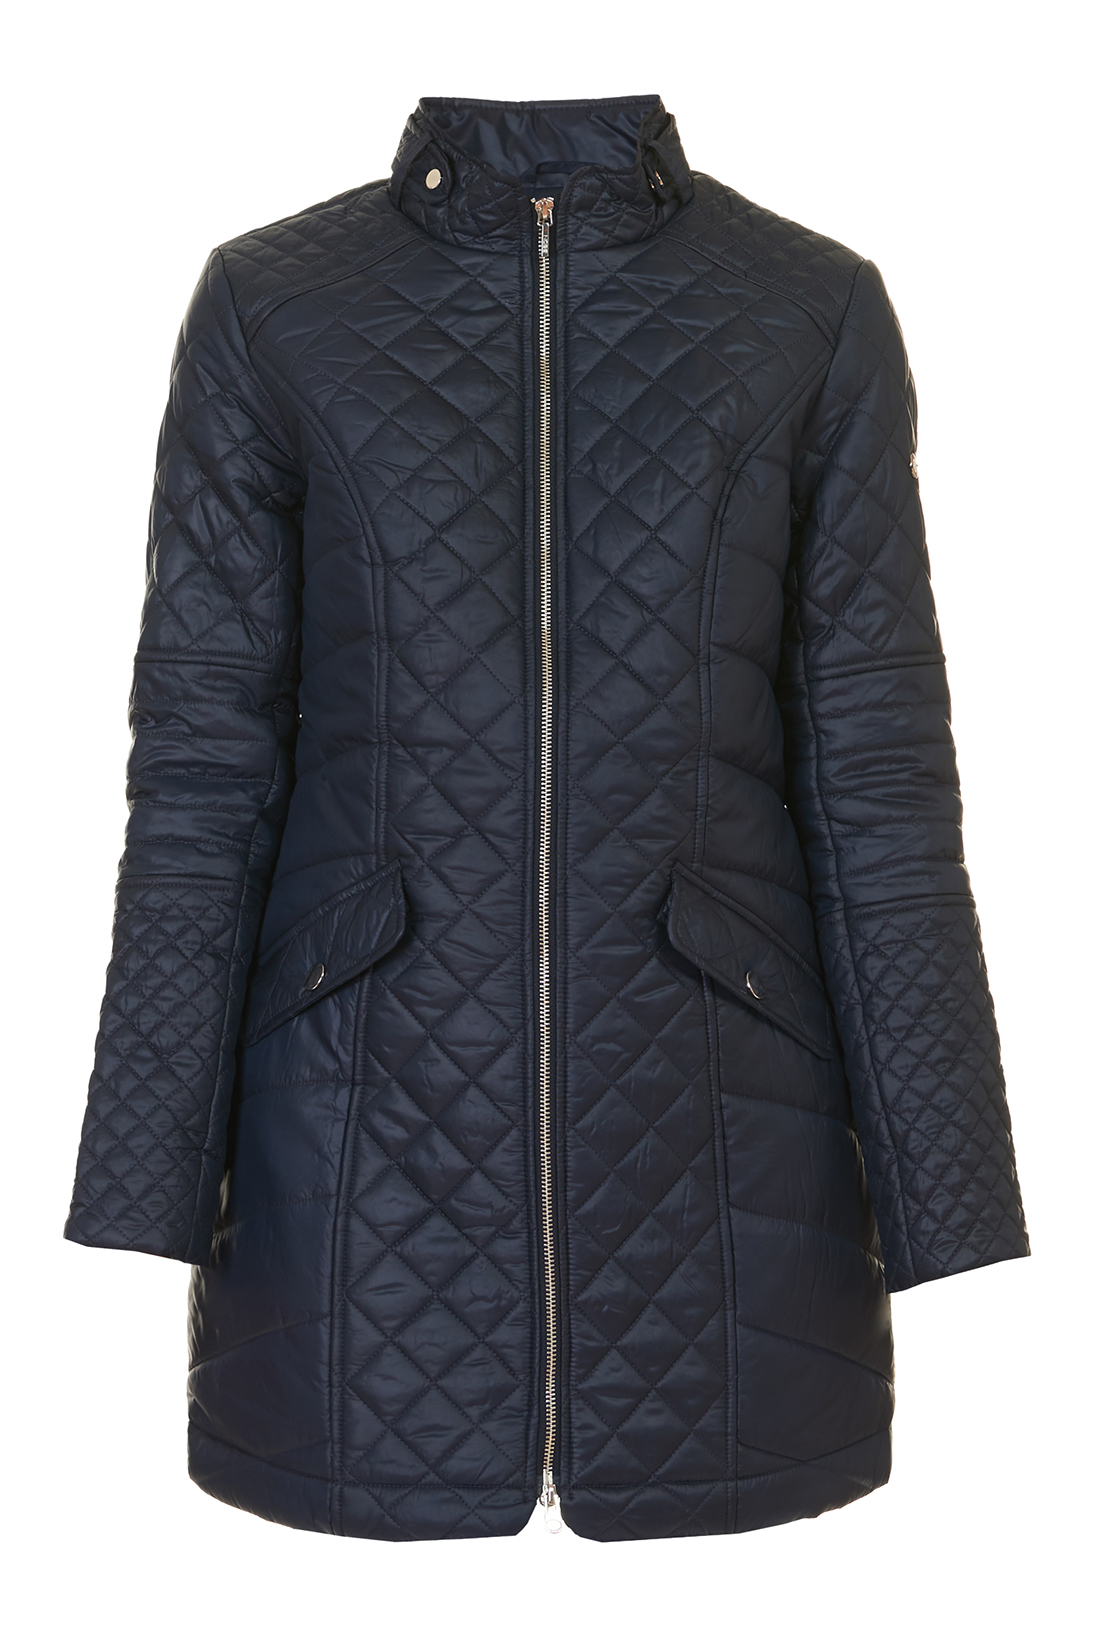 Удлинённая стёганая куртка (арт. baon B037535), размер XL, цвет синий Удлинённая стёганая куртка (арт. baon B037535) - фото 3